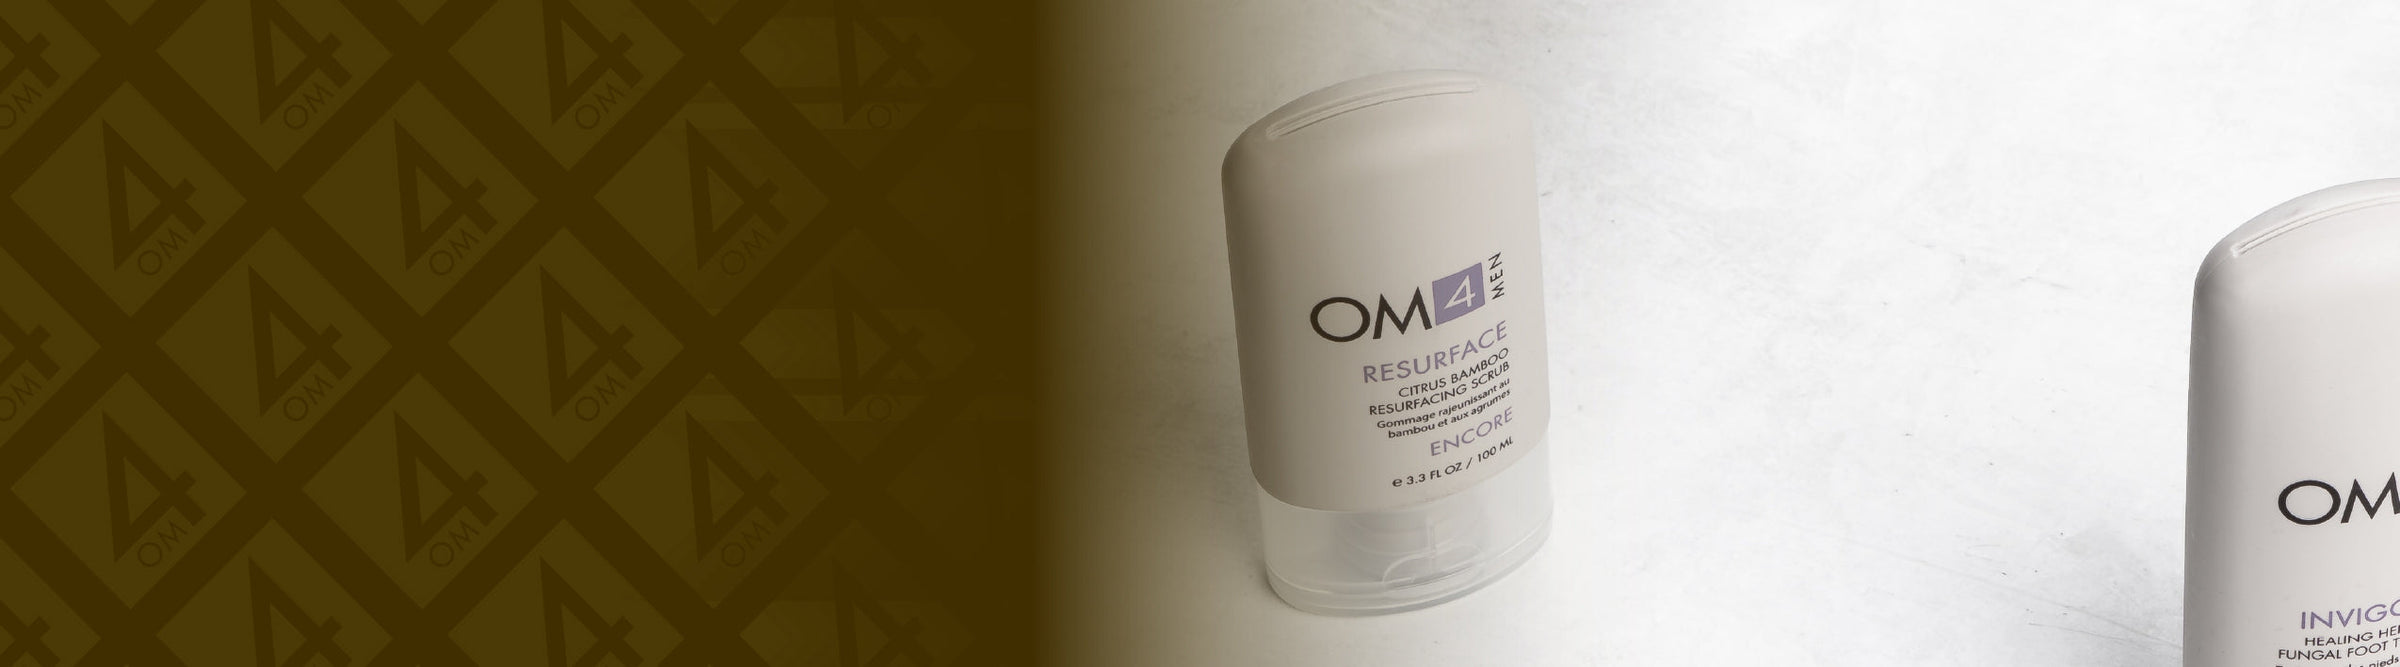 OM4 Organic Male Exfoliant Resurface